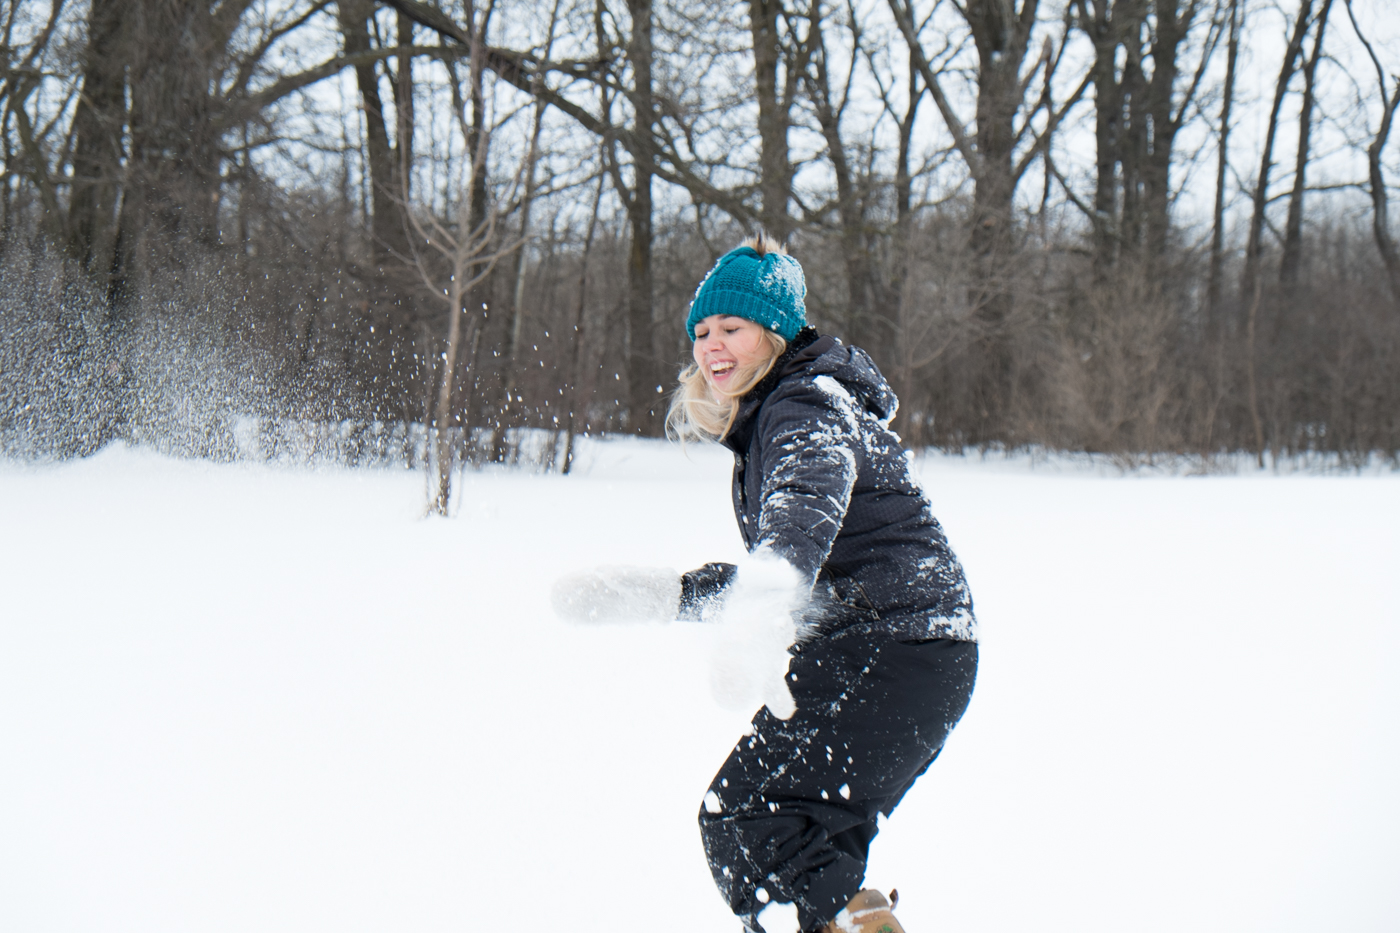 Debora Dahl playing in the snow